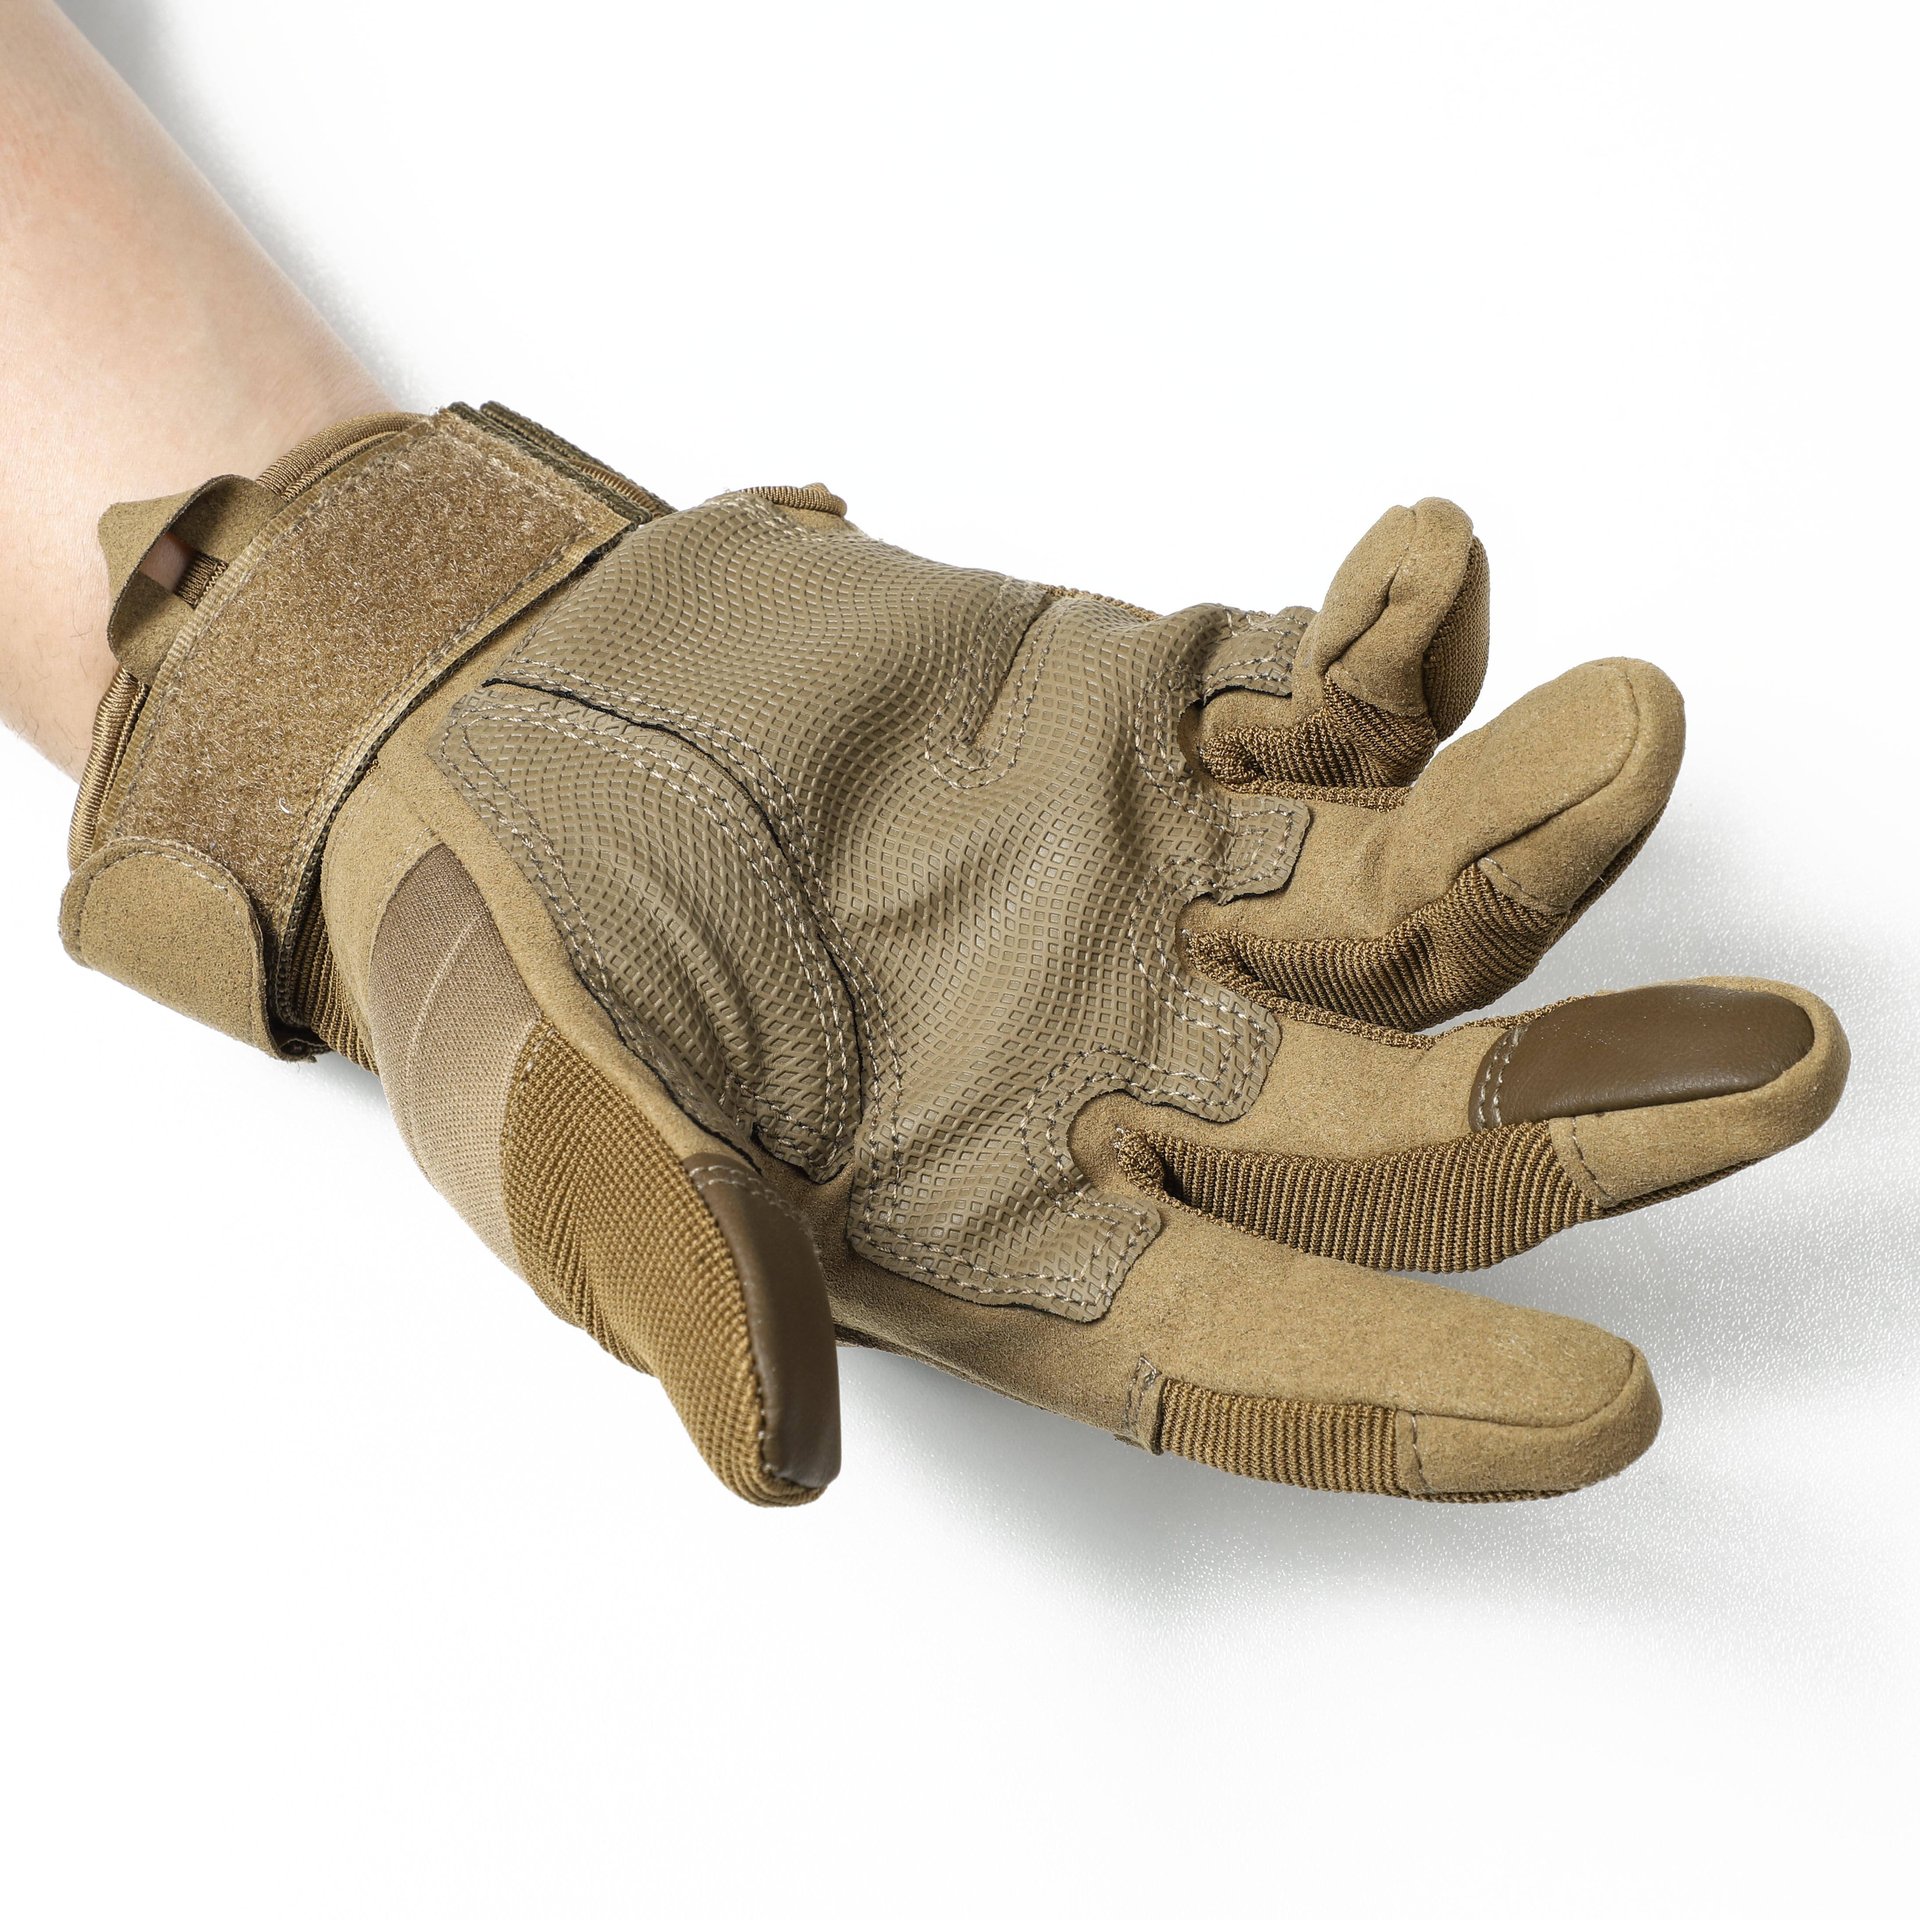 Protective Shock Resistant Winter Full Finger Combat Tactical Gloves